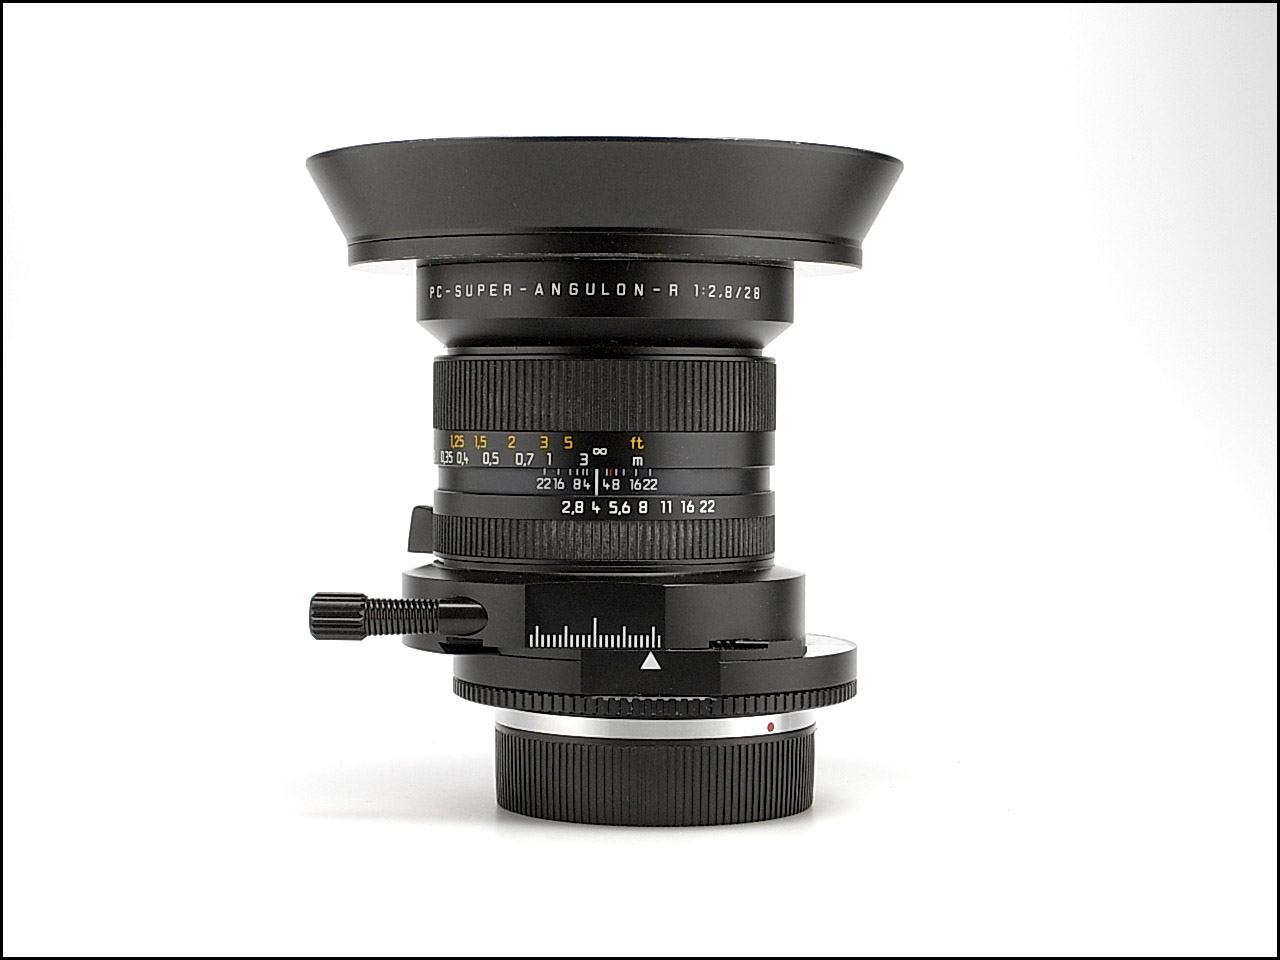 徕卡 Leica R 28/2.8 PC-SUPER-ANGULON-R 带皮套 光罩